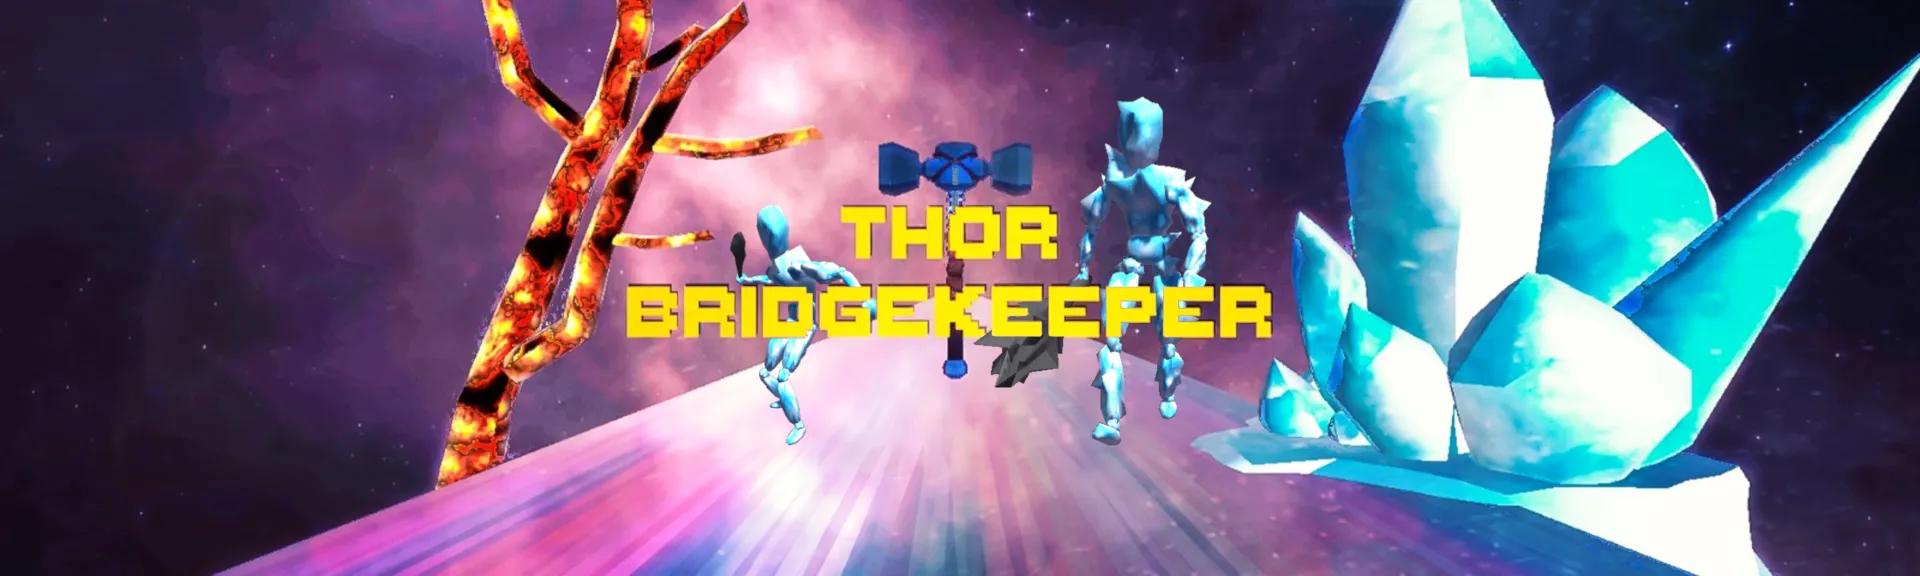 Thor Bridgekeeper